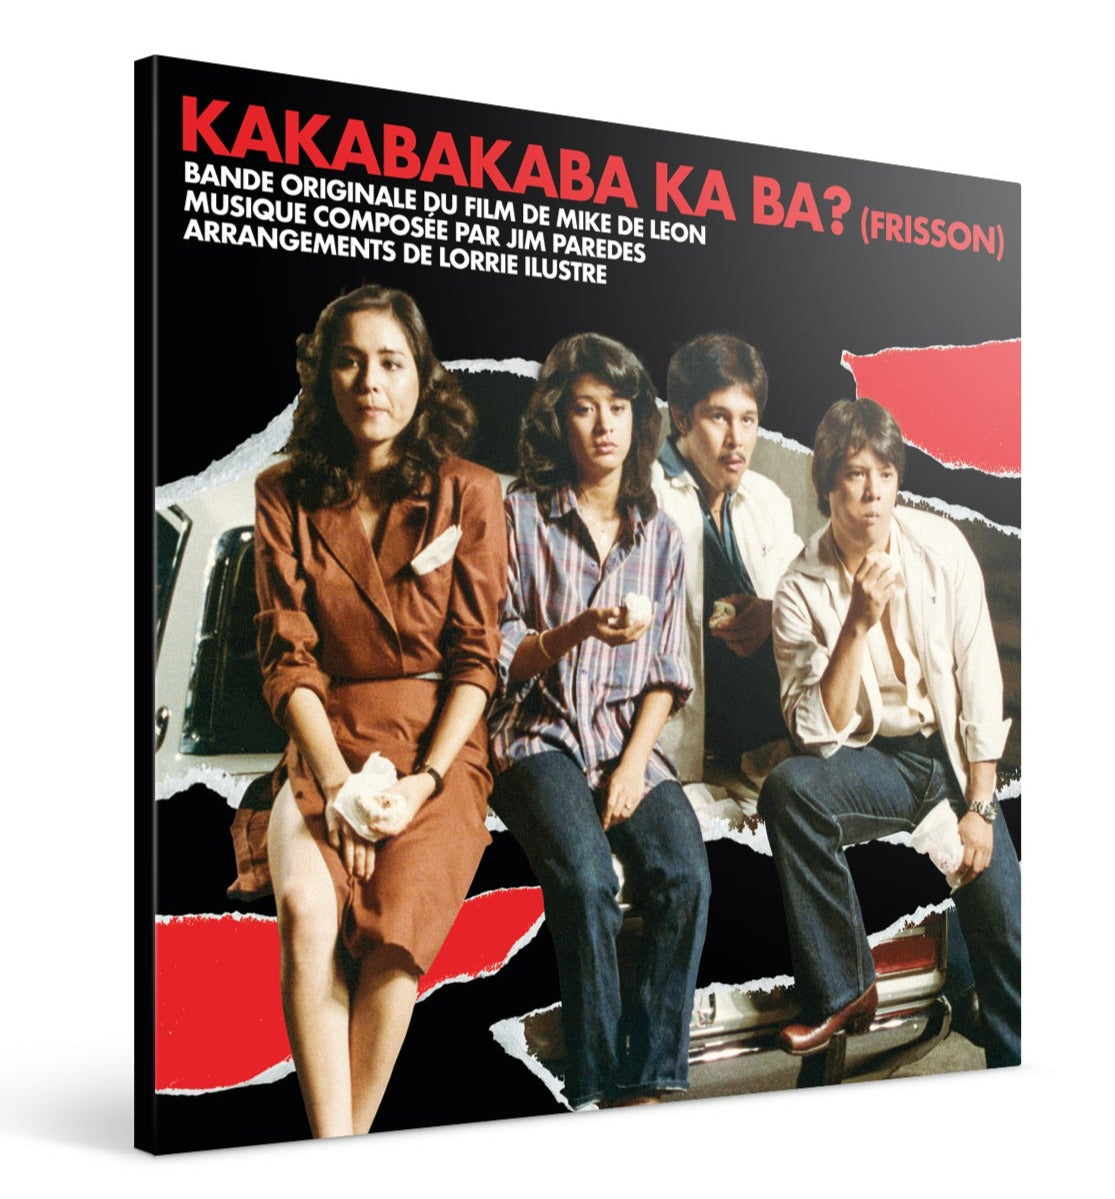 Vinyle LP Kakabakaba Ka Ba?